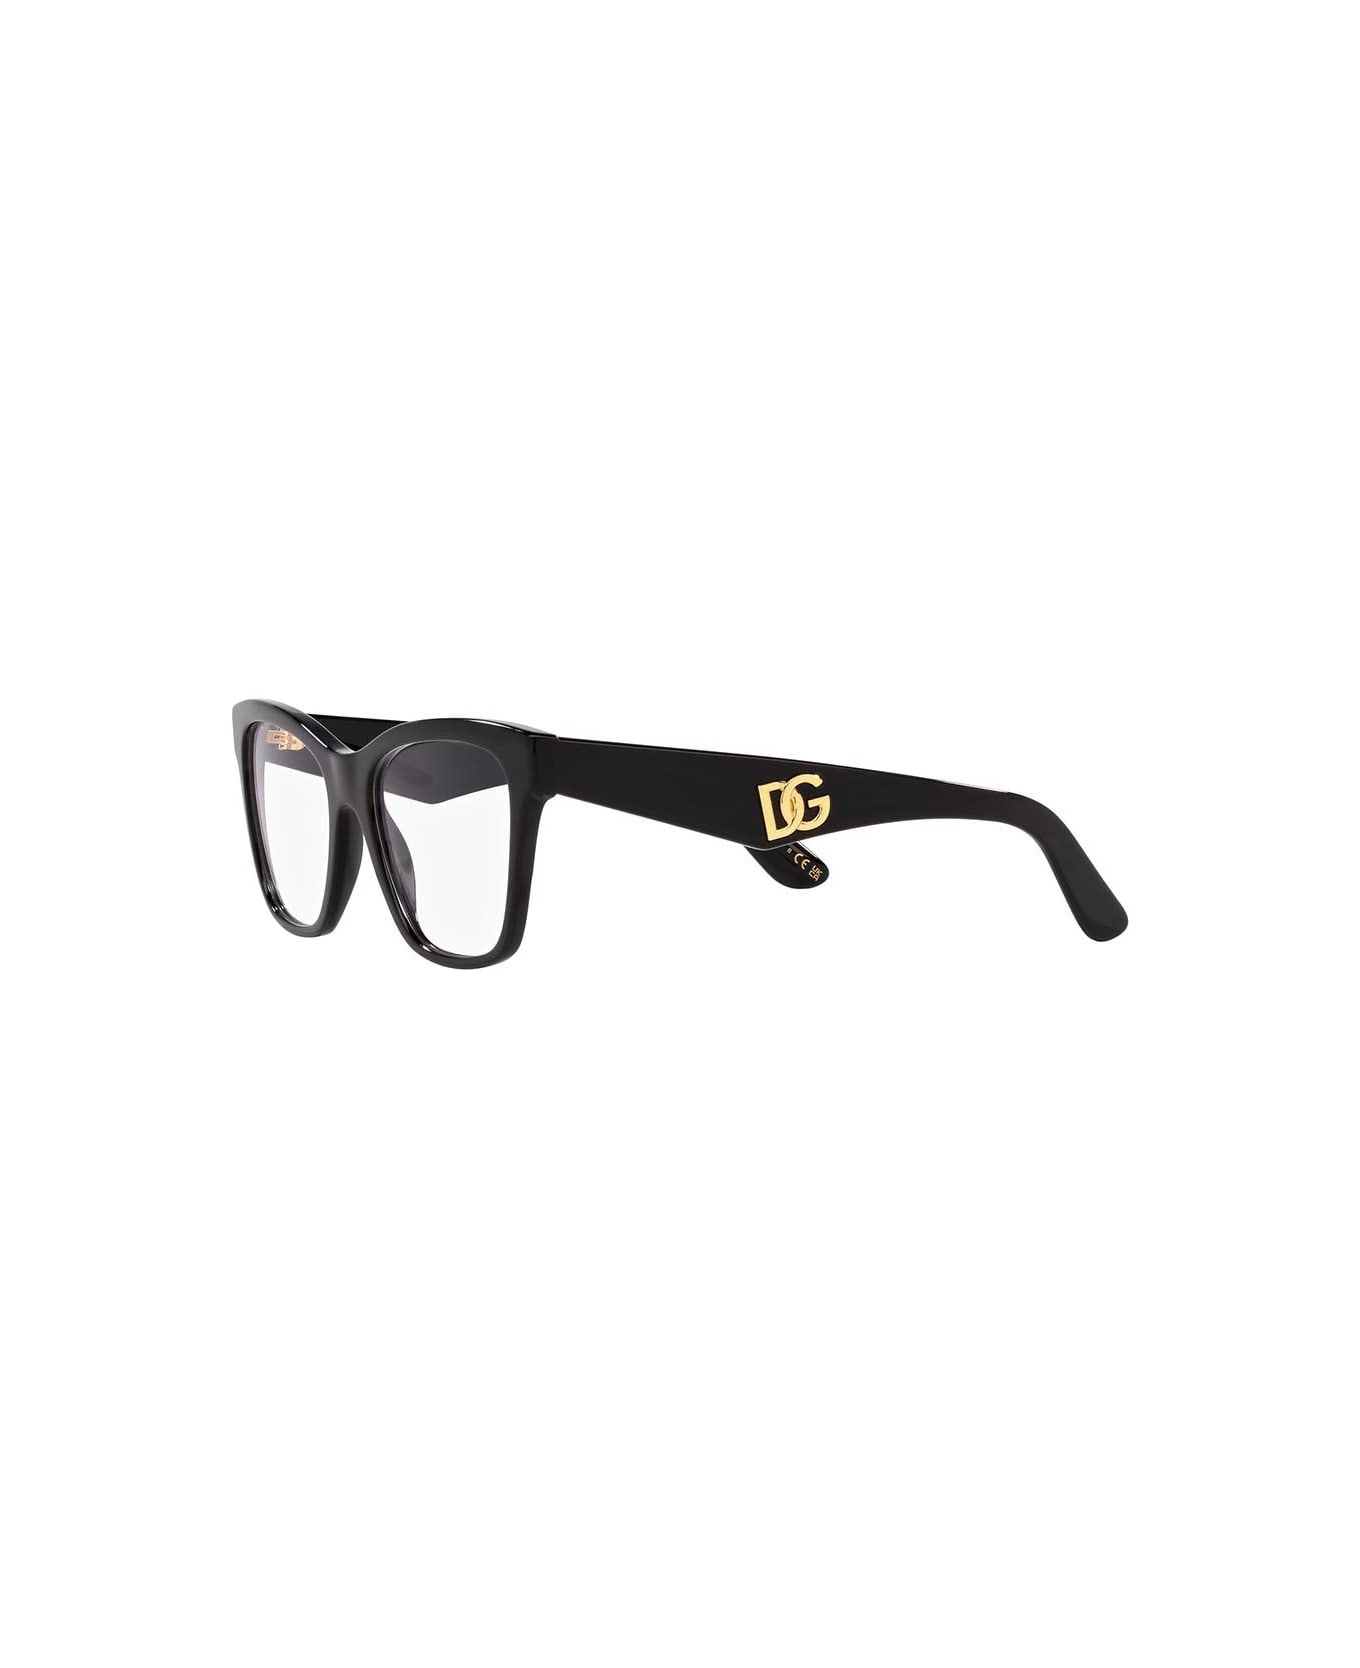 Dolce & Gabbana 'sicily' Leather Tote Bag Eyewear Glasses - Nero